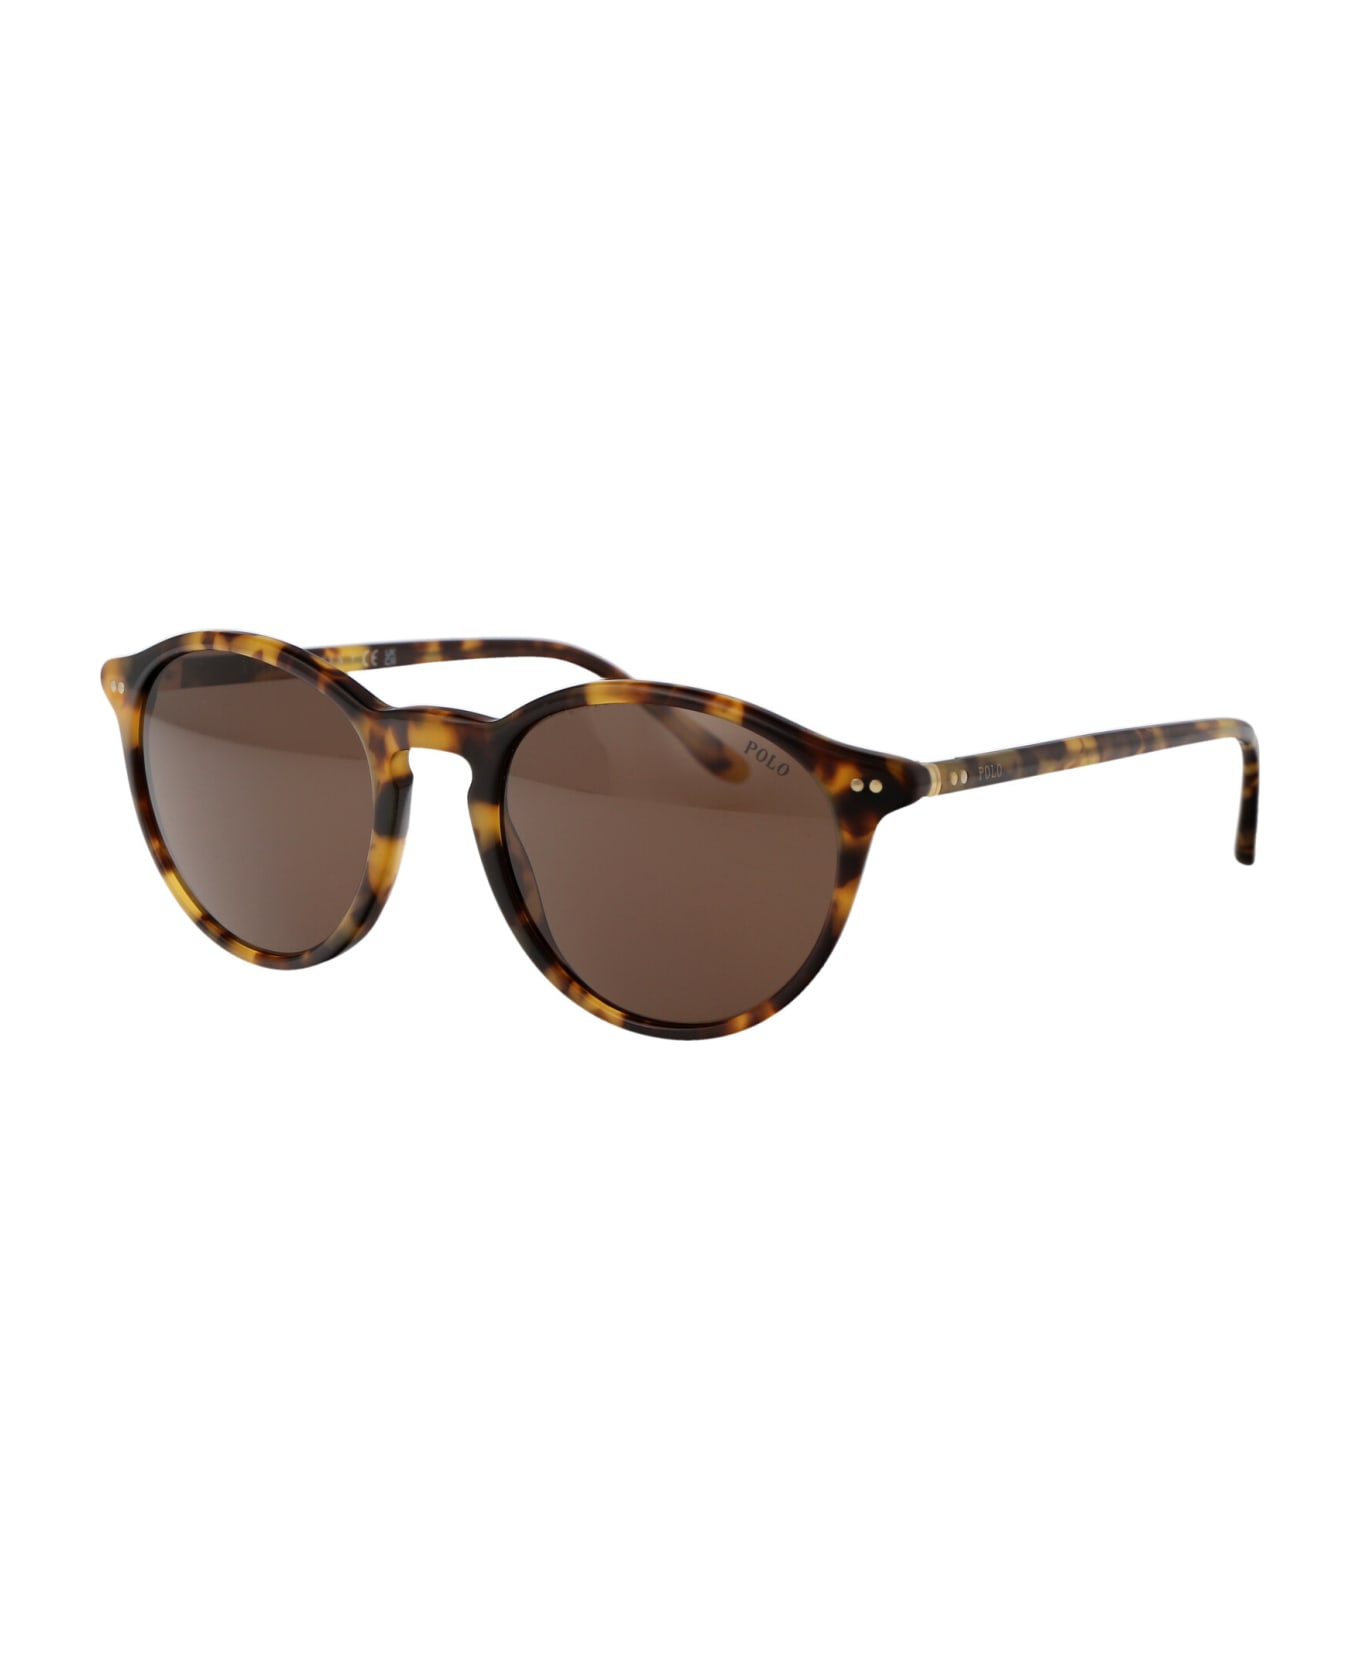 Polo Ralph Lauren 0ph4193 Sunglasses - 535273 Shiny Spotty Havana